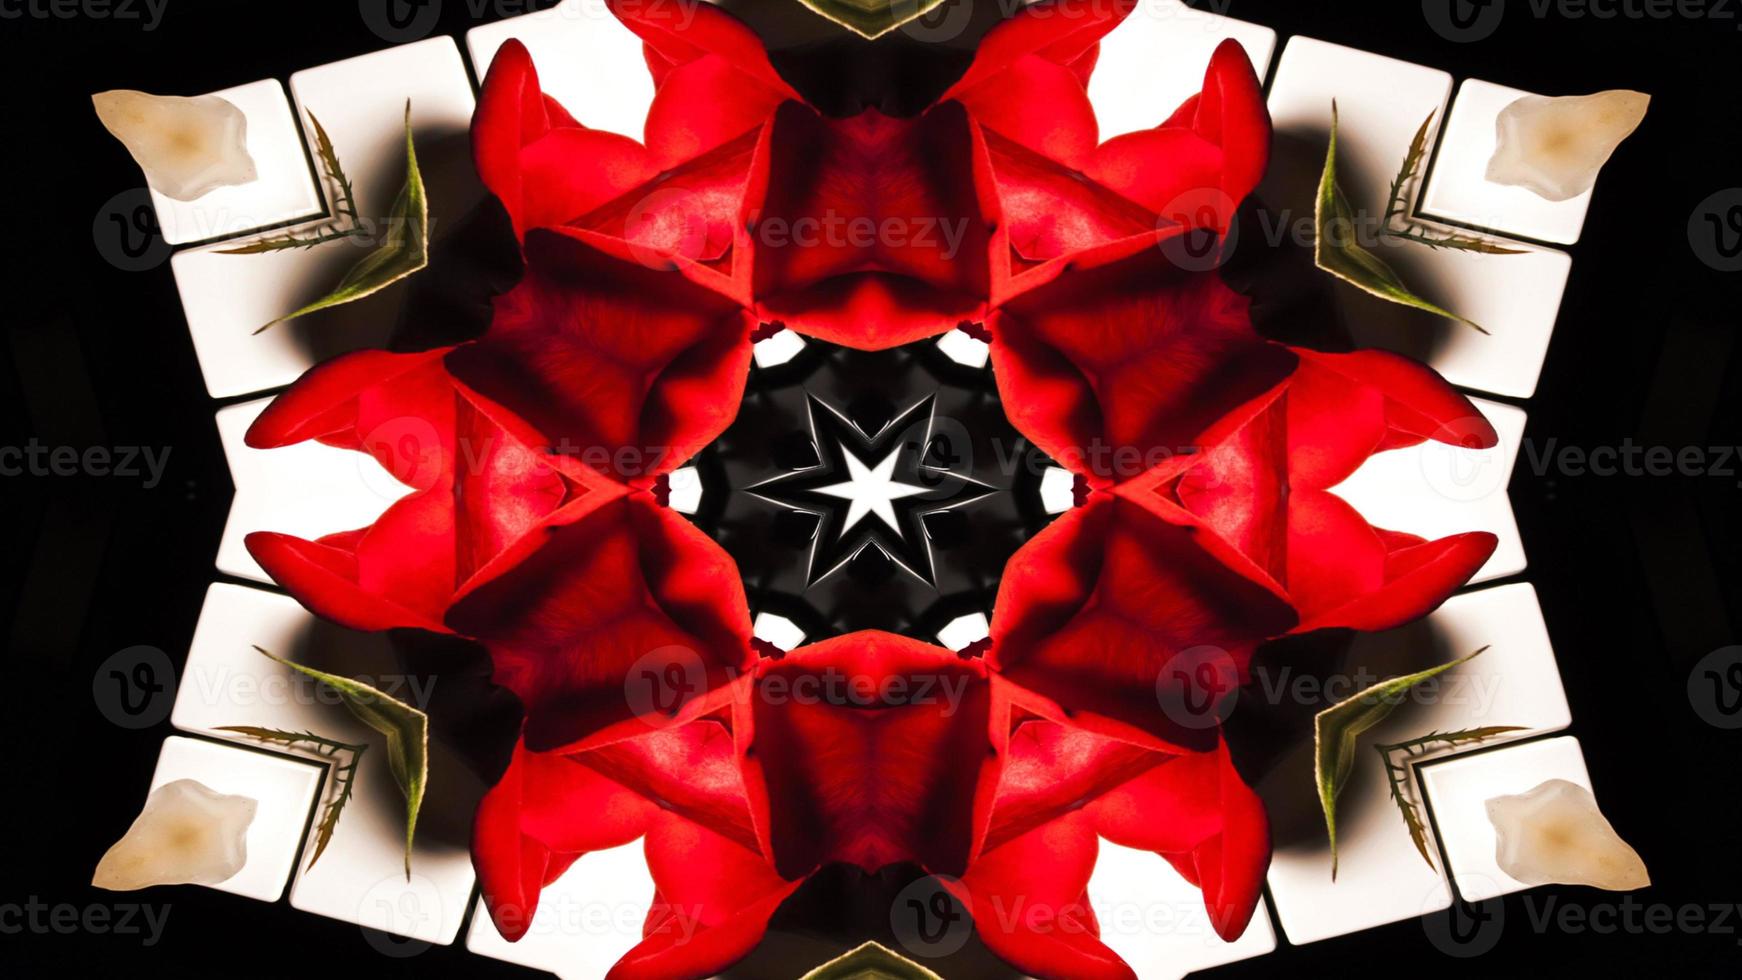 Colorful Hypnotic  Symmetric Kaleidoscope photo